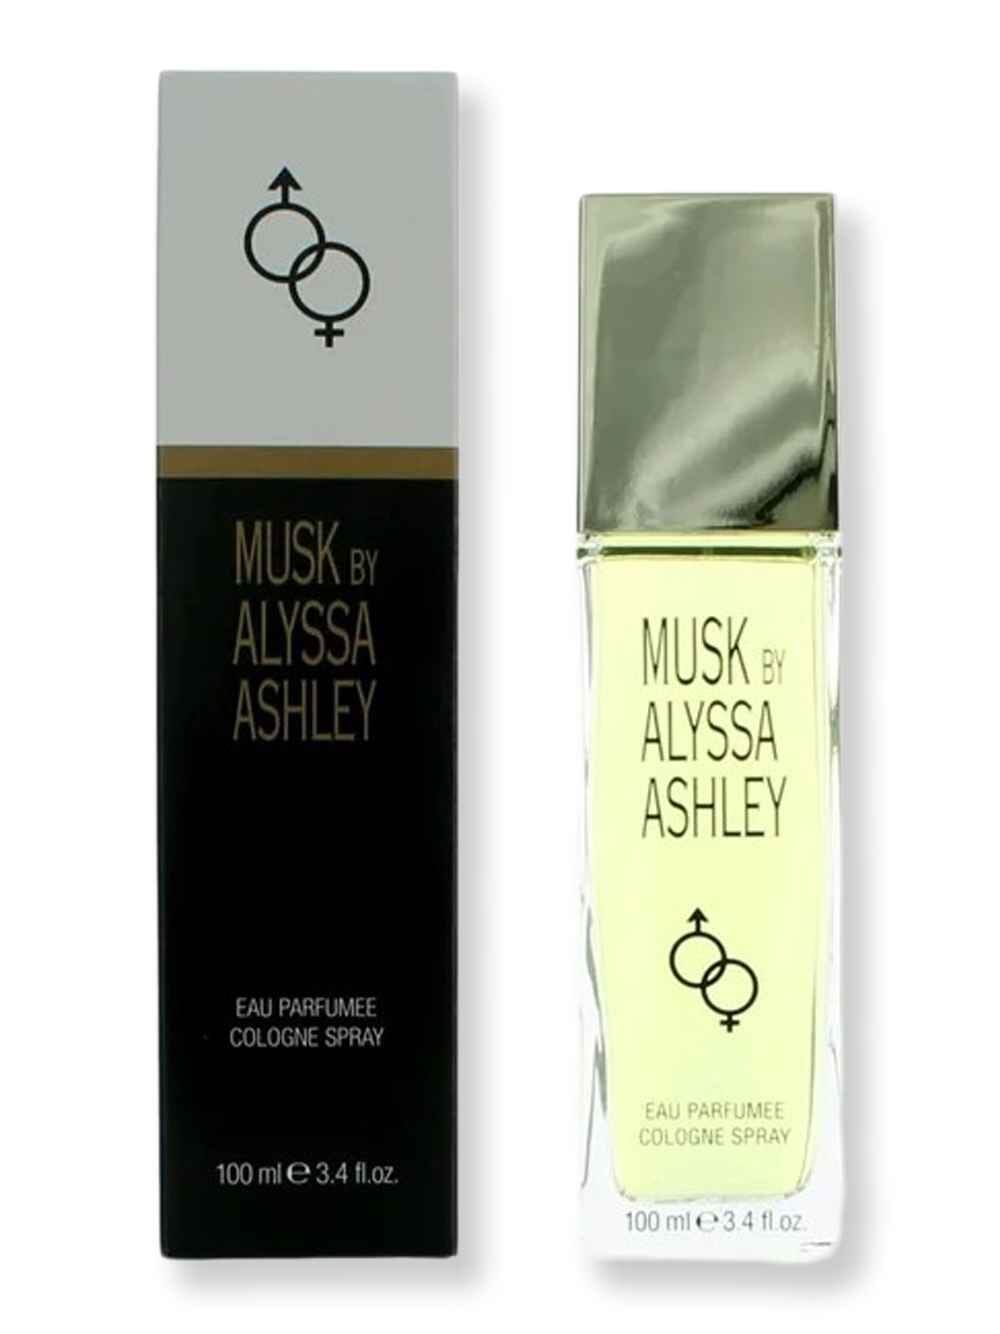 Alyssa Ashley Alyssa Ashley Musk Eau Parfumee Cologne Spray 3.4 oz100 ml Cologne 